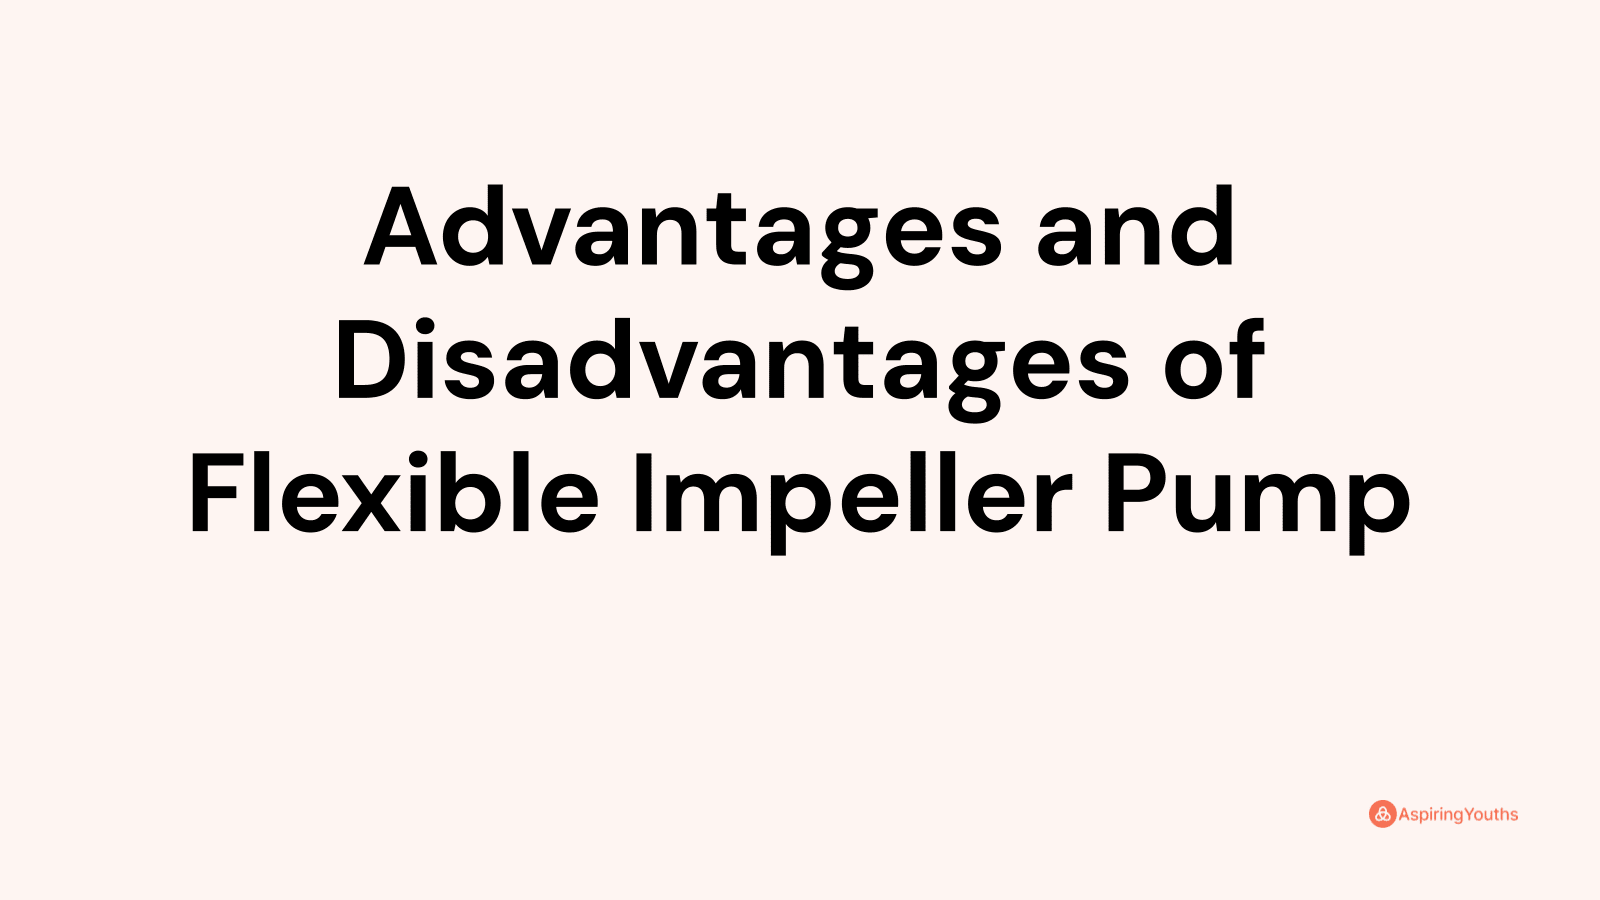 Advantages and disadvantages of Flexible Impeller Pump